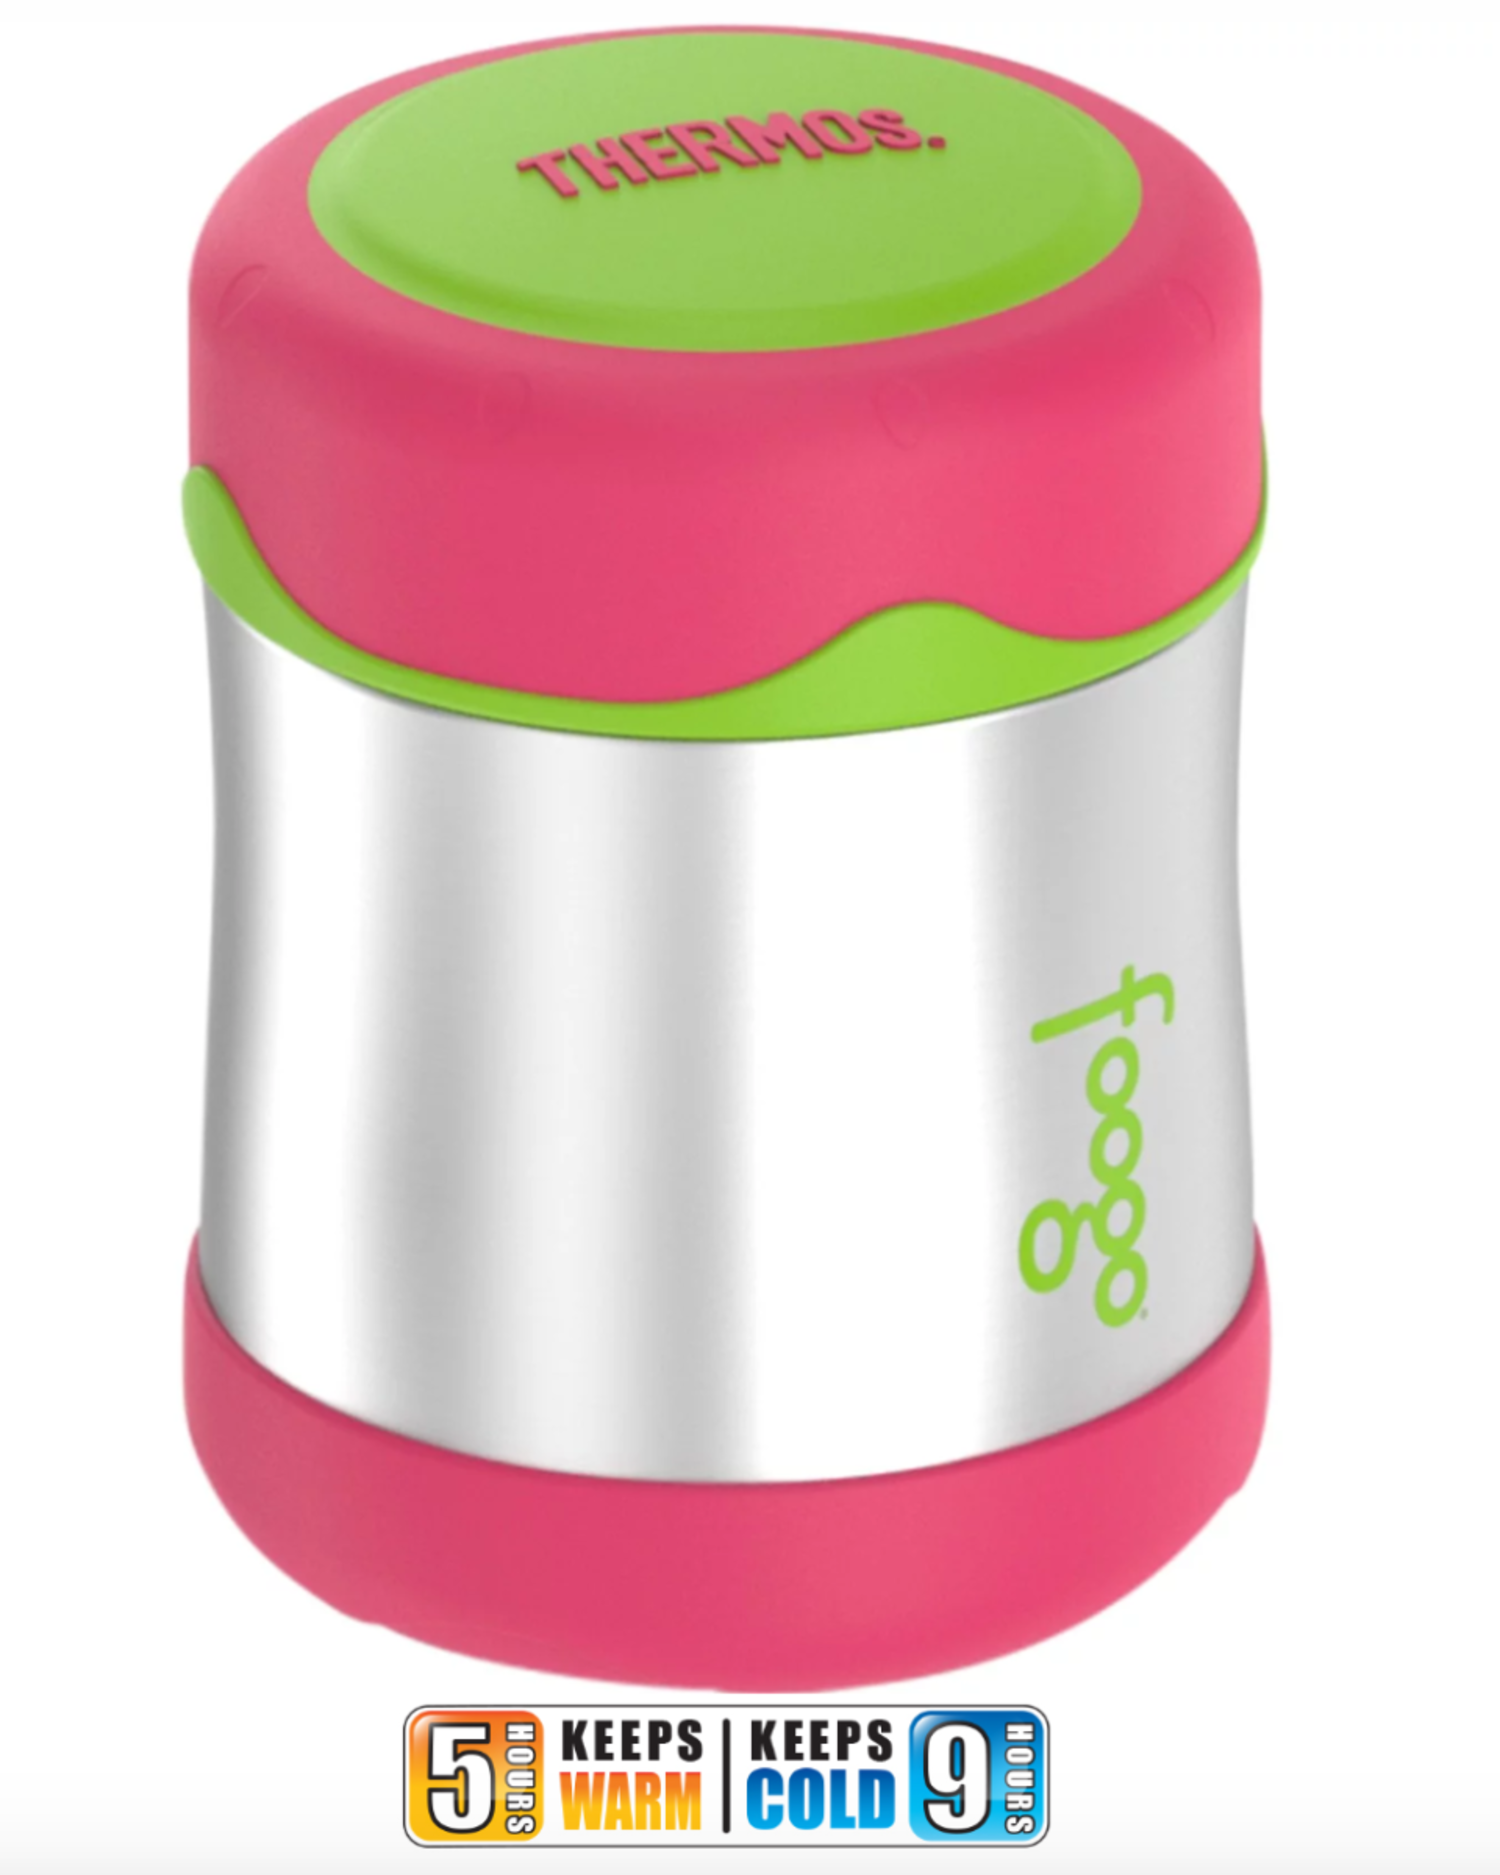 Thermos 10-oz. Food Jar with Handle